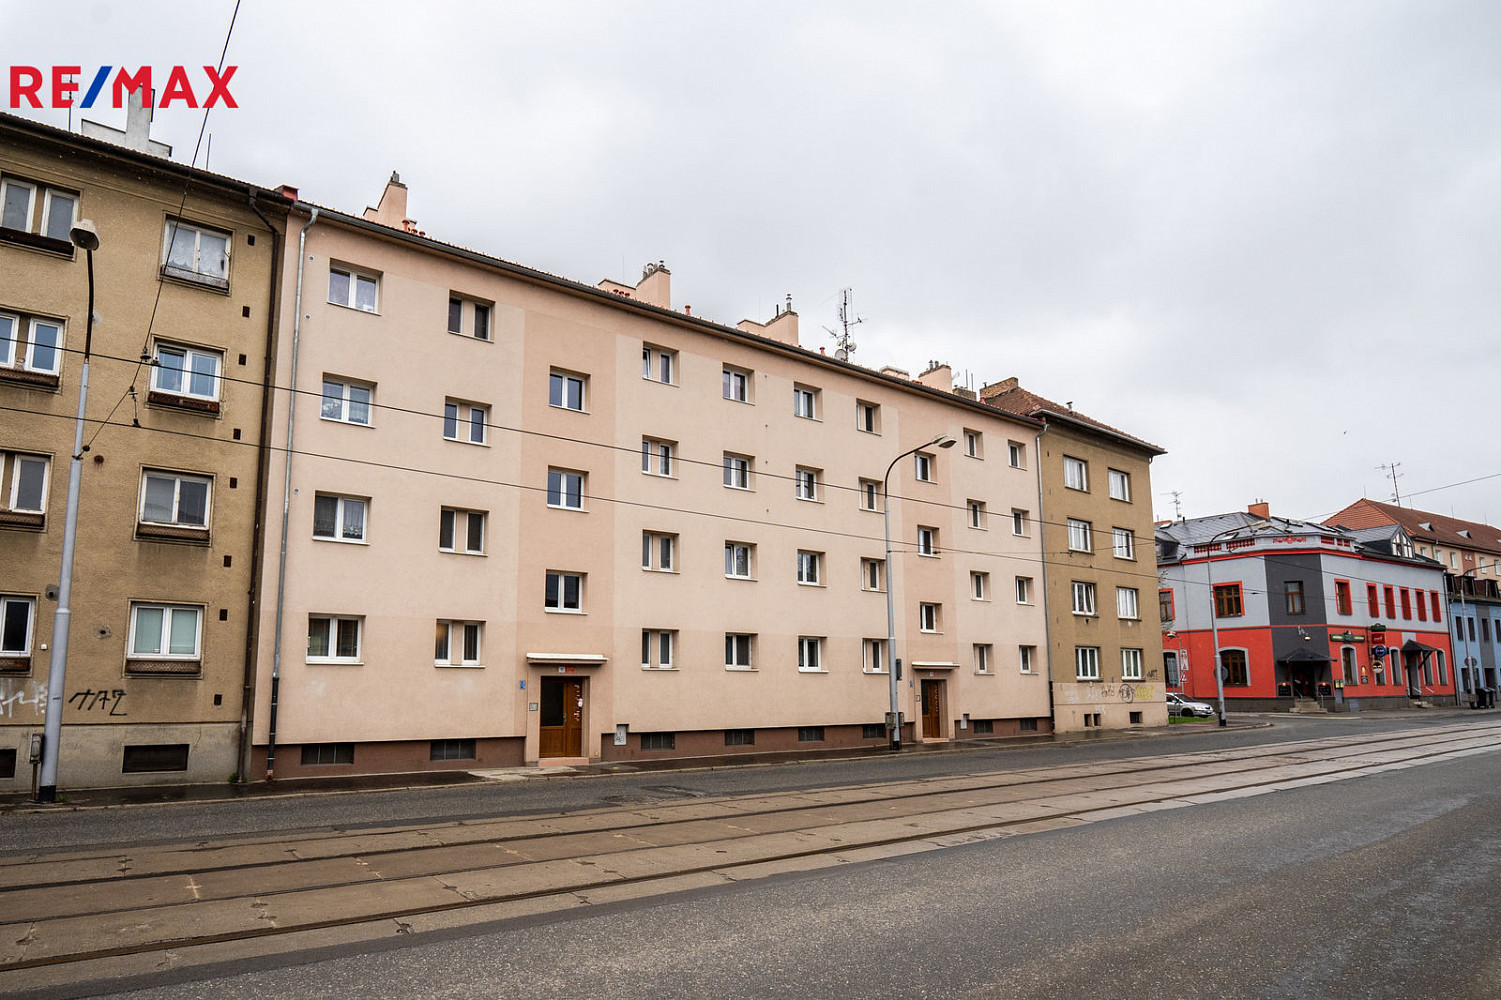 Olomouc - Nová Ulice